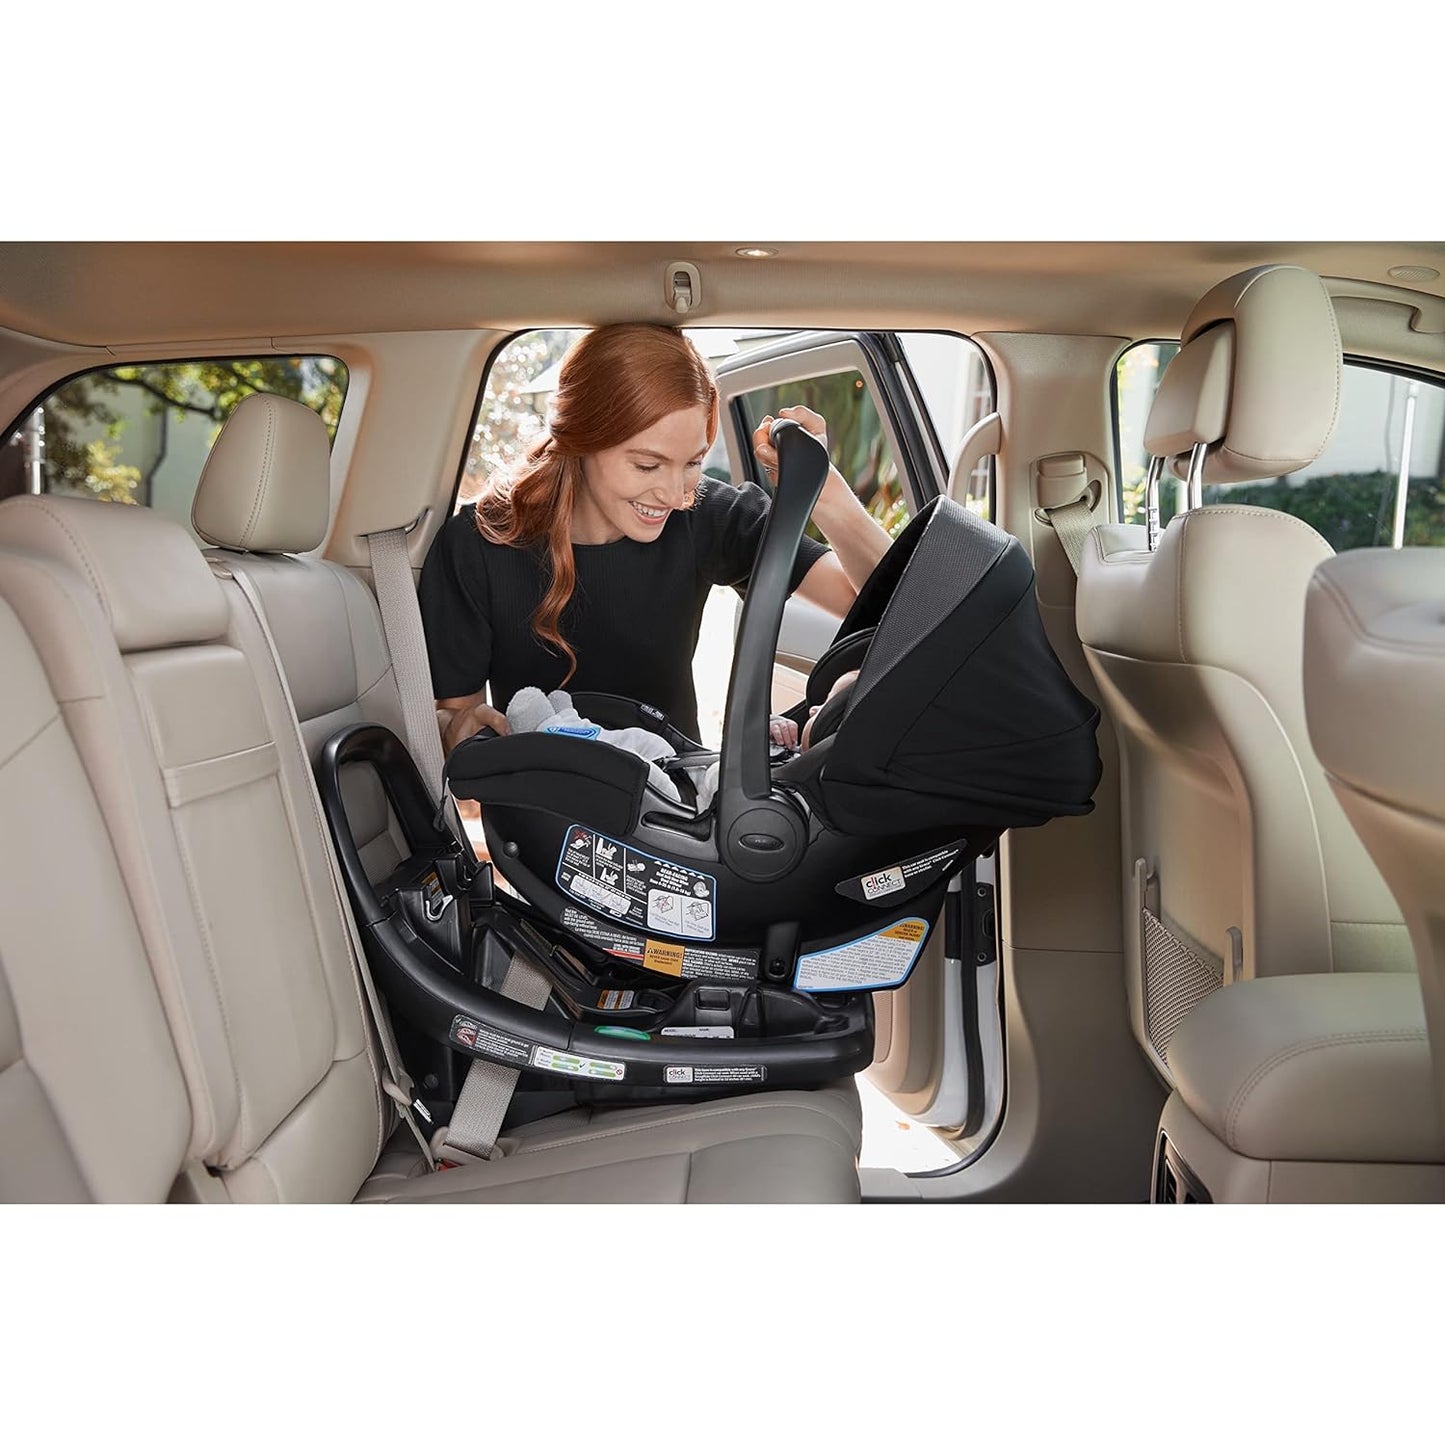 New Graco SnugRide SnugFit 35 DLX Infant Car Seat (Spencer)